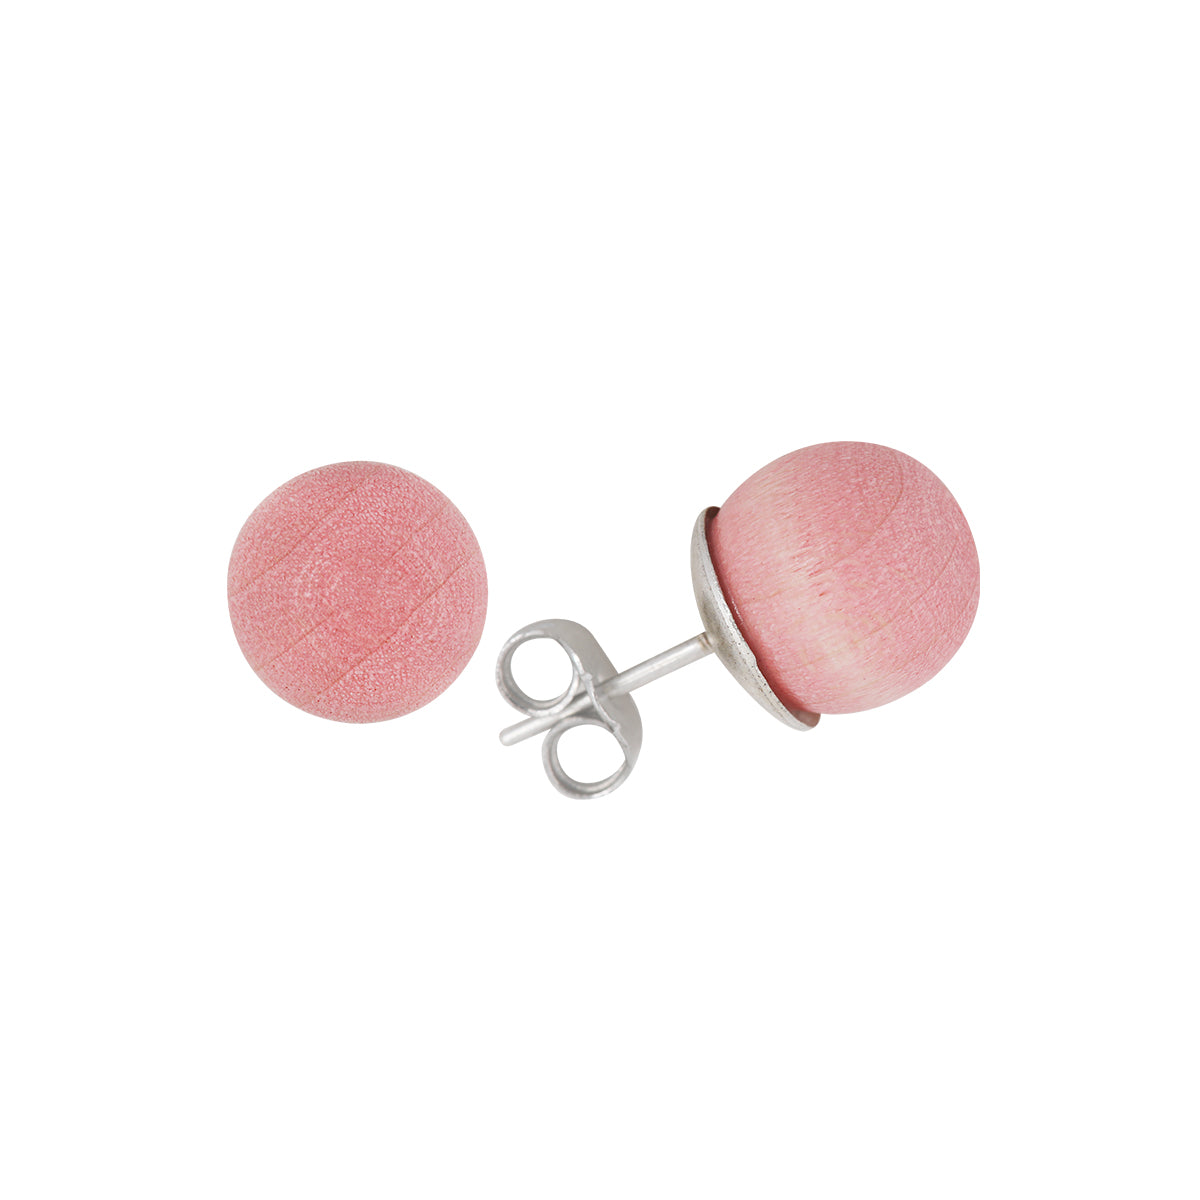 Alisa earrings, color options